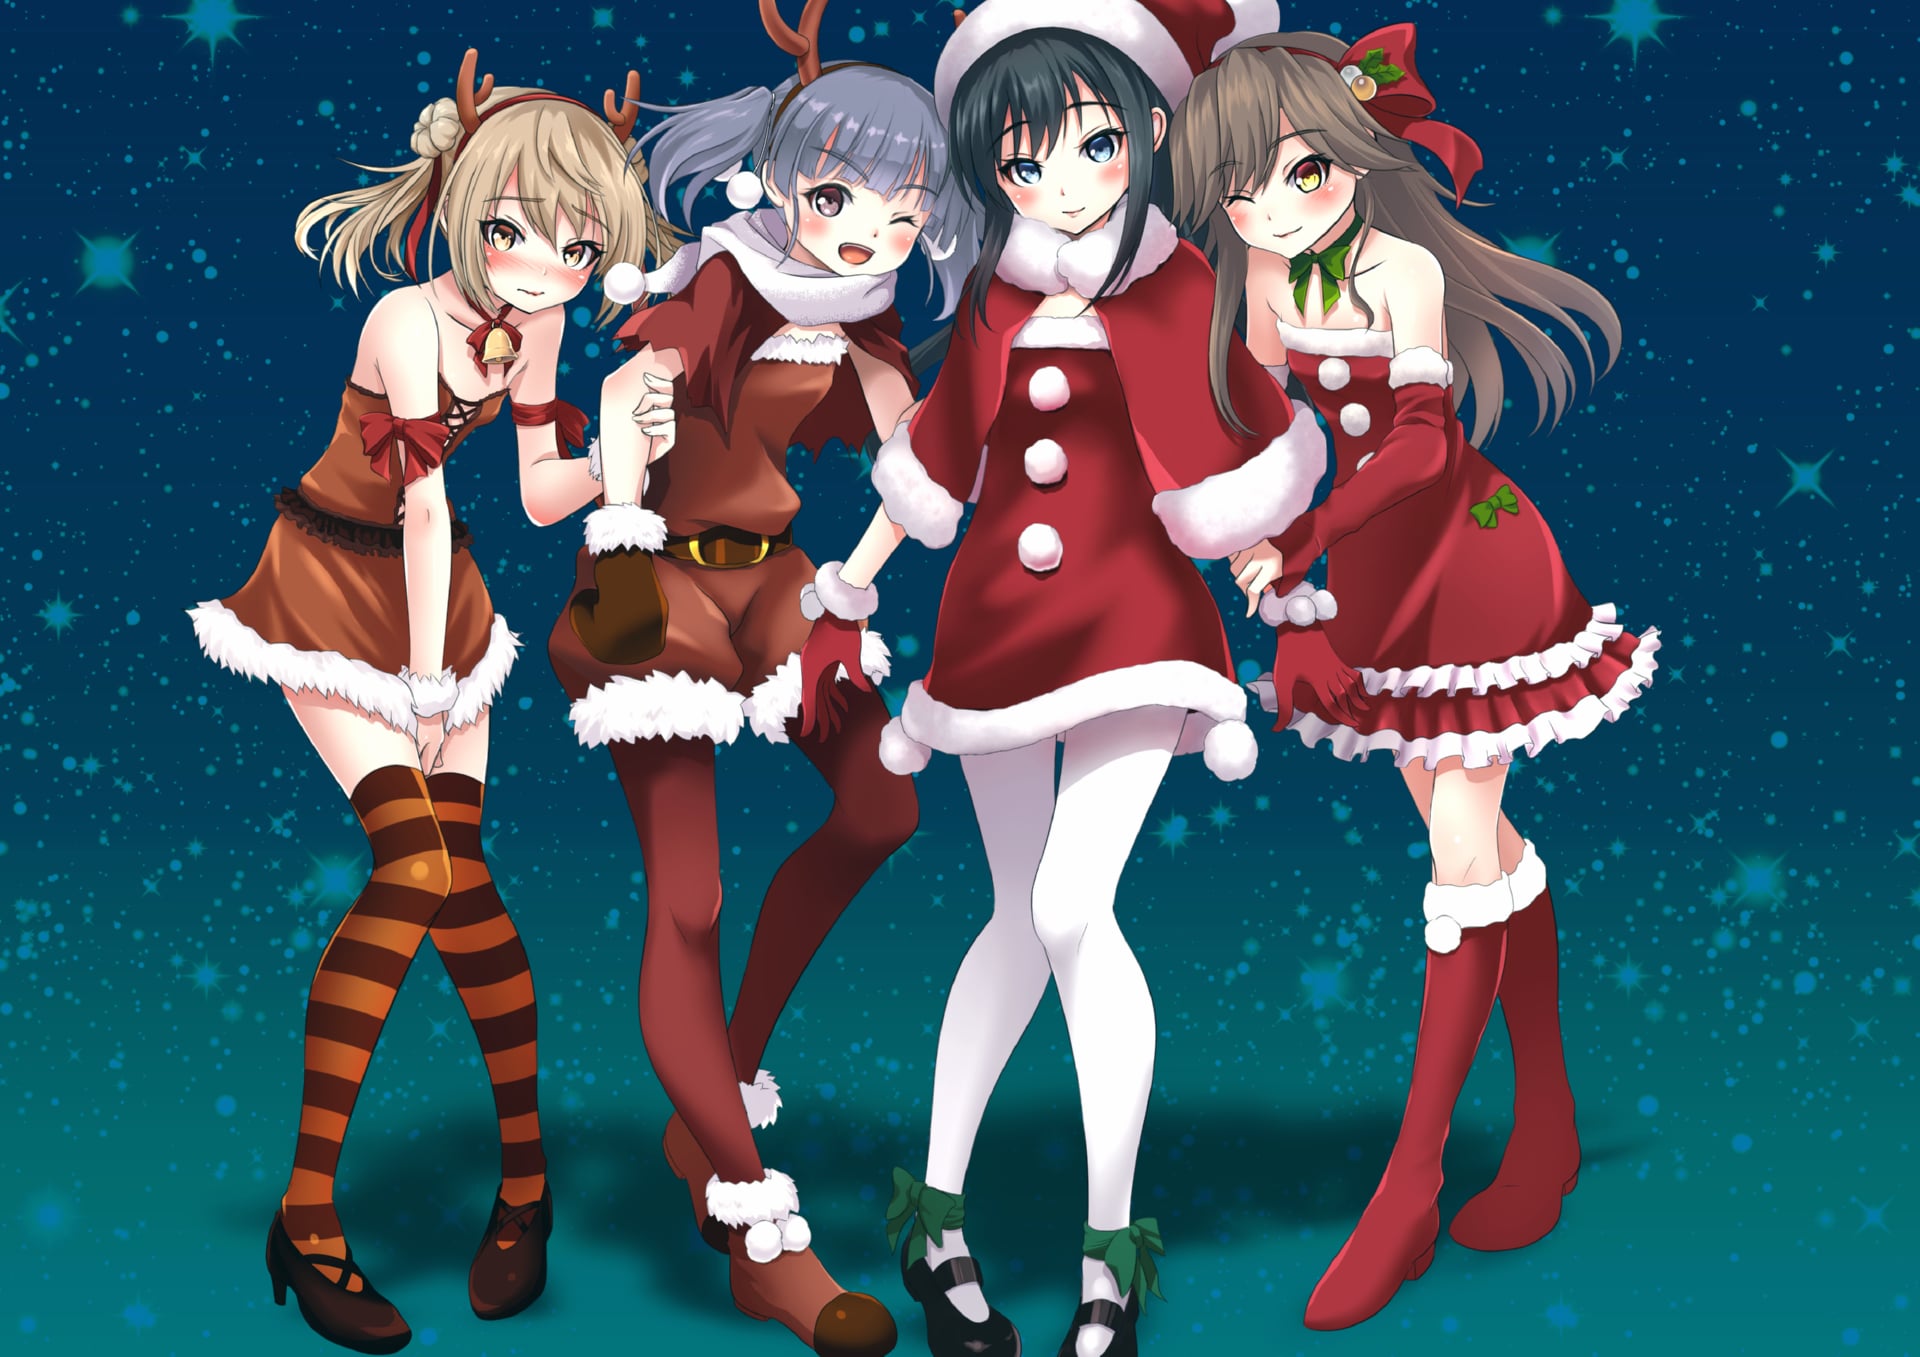 Anime Christmas at 2048 x 2048 iPad size wallpapers HD quality